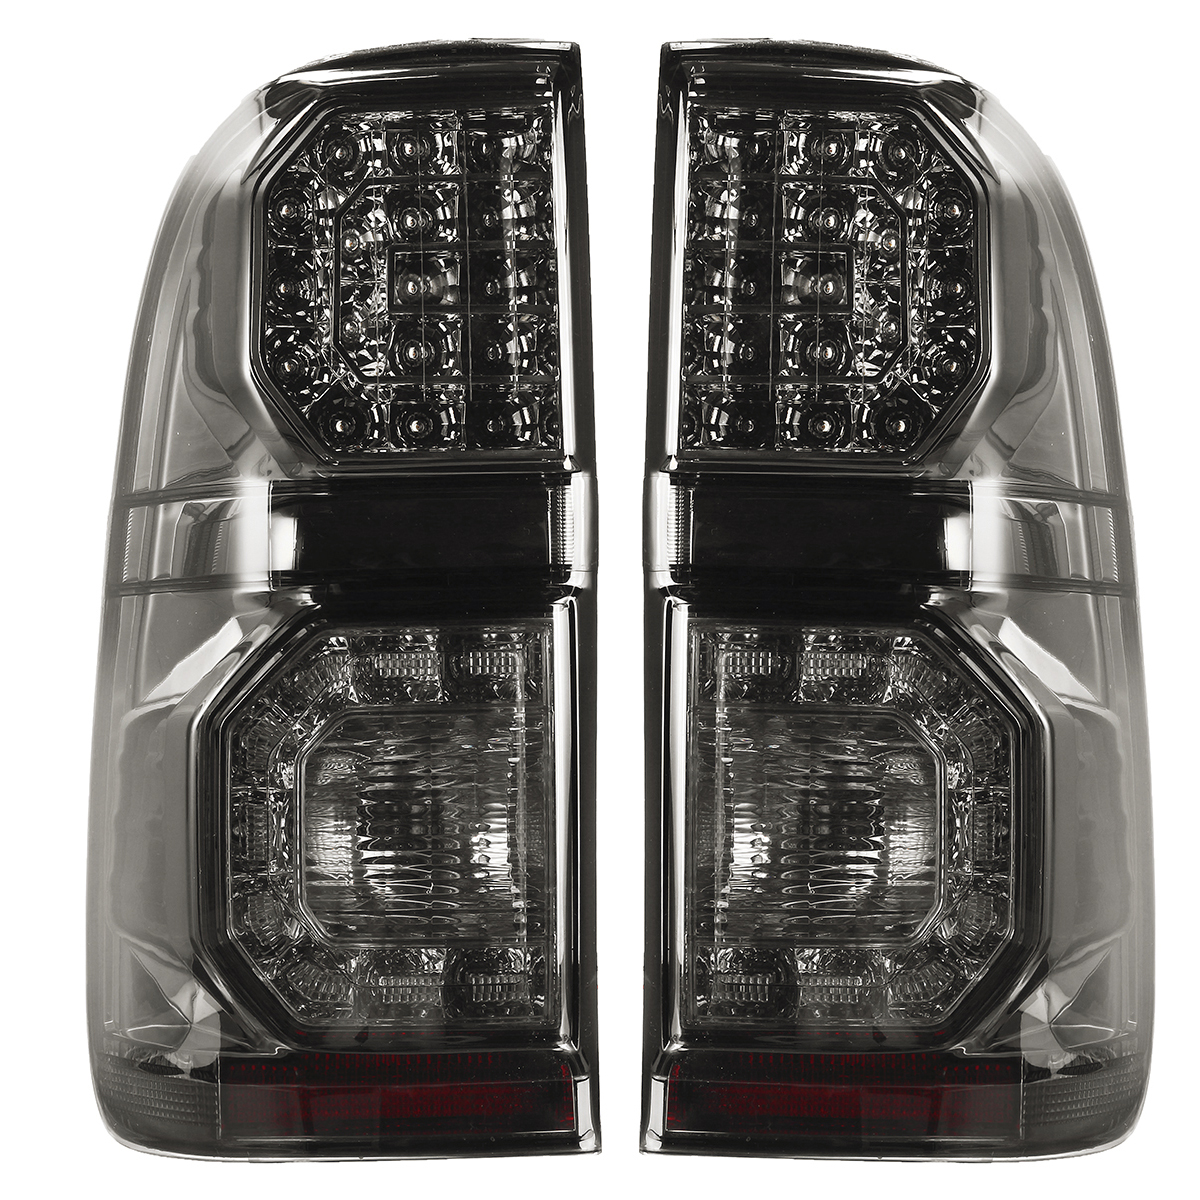 

For Toyota Hilux(Vigo) 2004-2015 Pair Car LED Rear Tail Brake Light Lamp Smoke Black